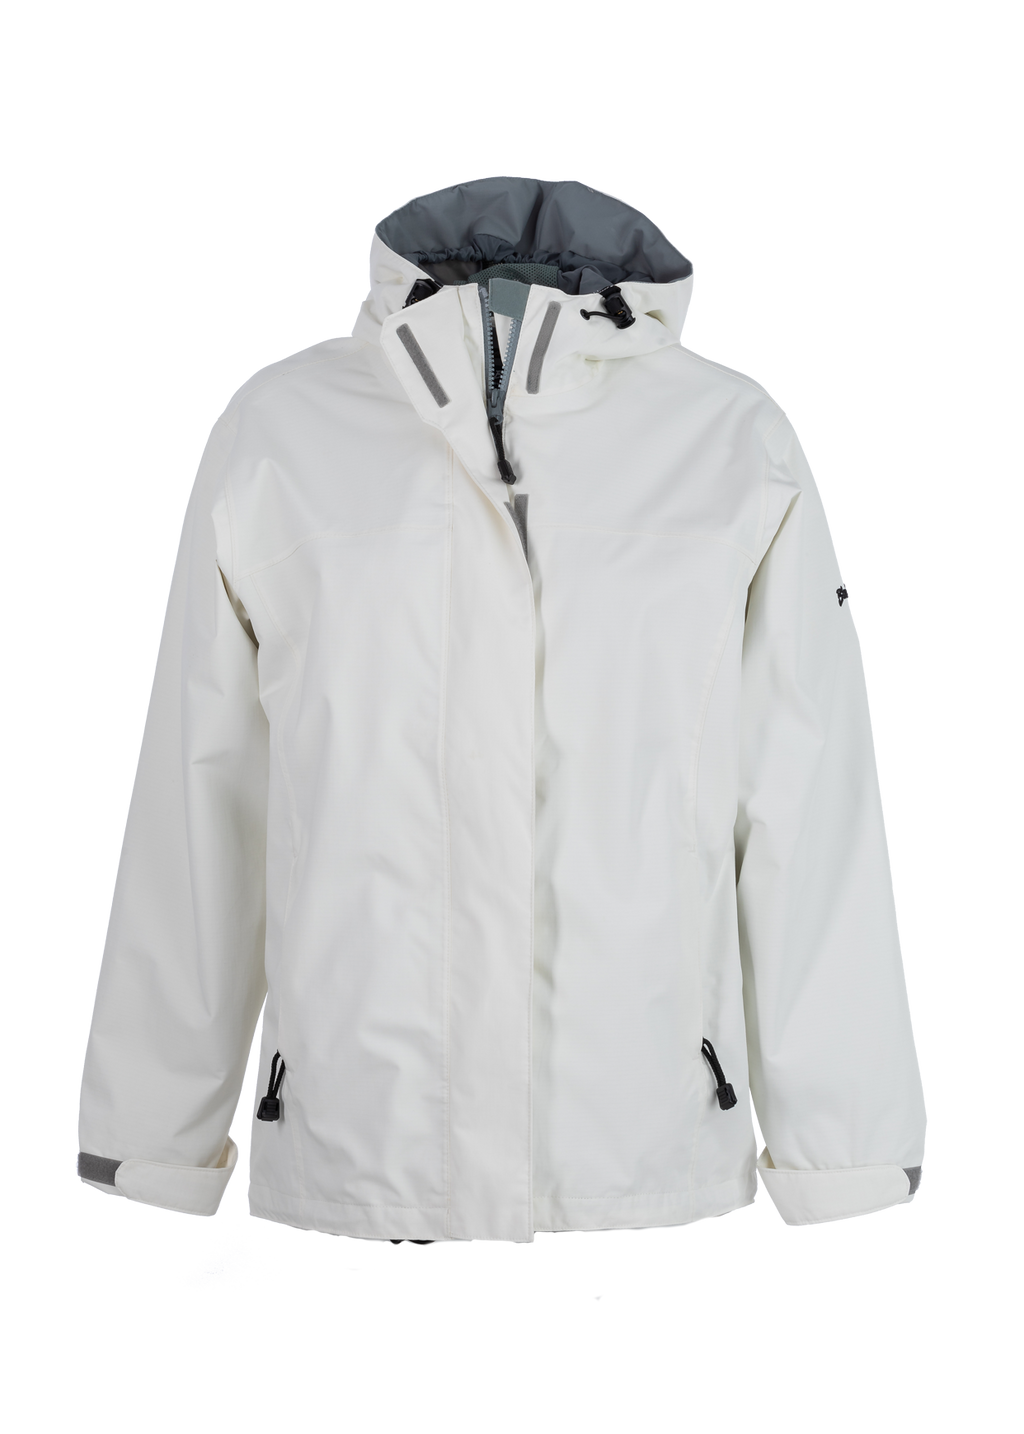 Bimini Bay Outfitters Boca Grande Women's Waterproof Breathable Jacket